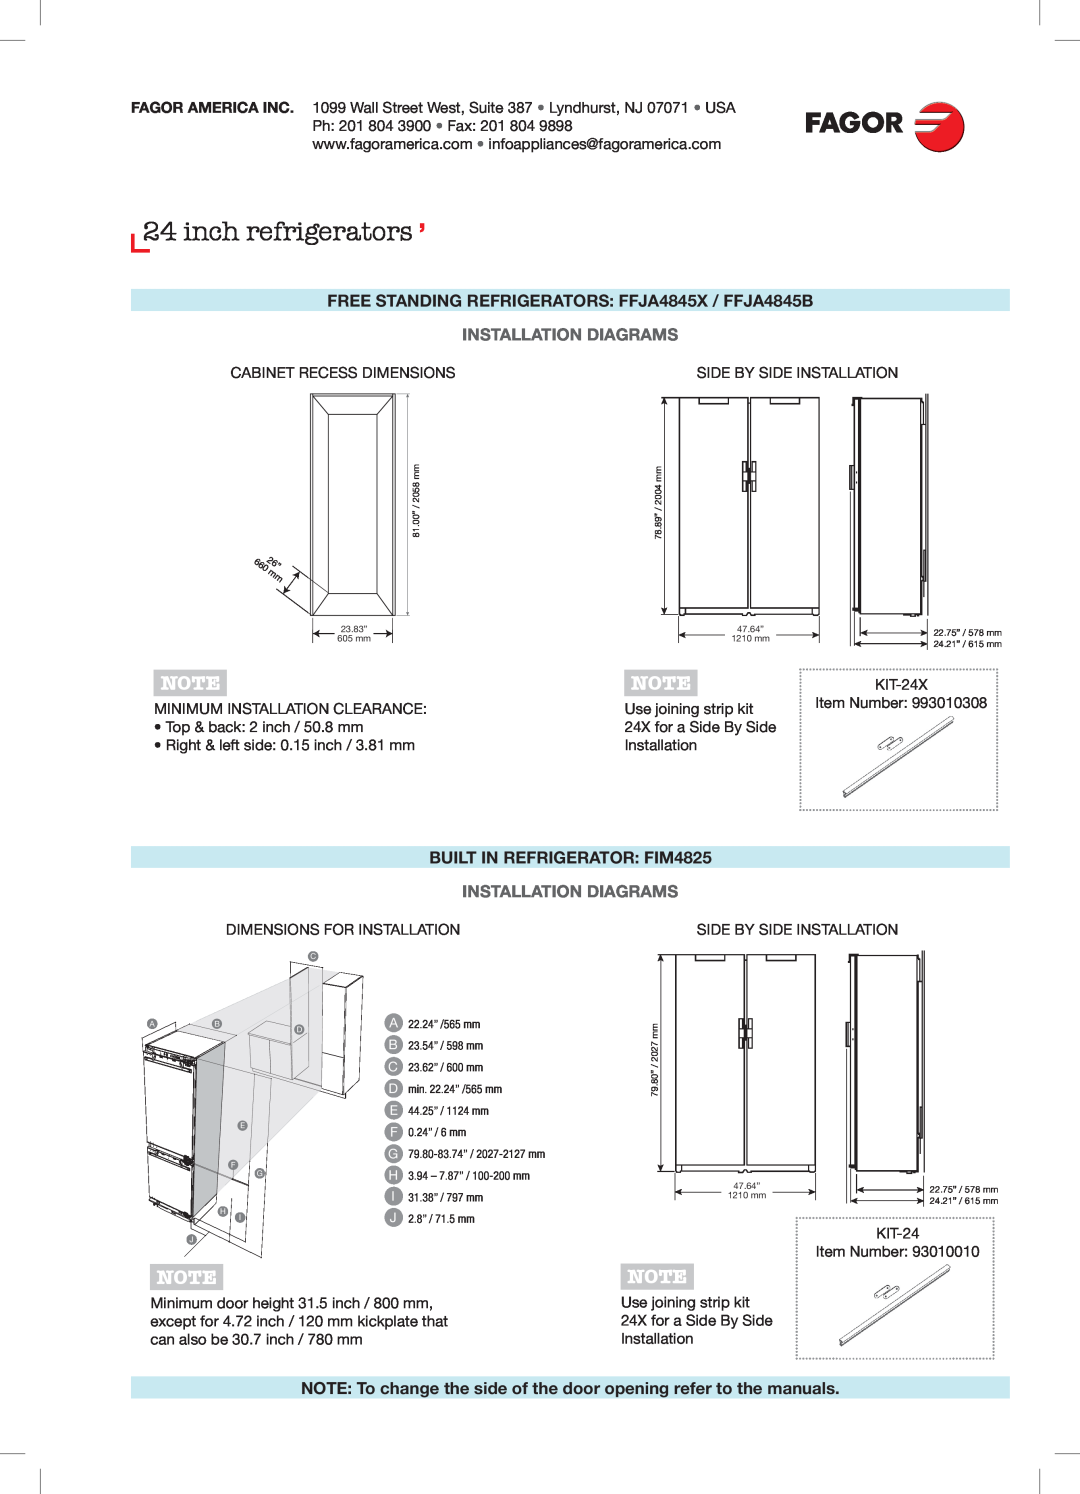 Fagor America KIT-24X dimensions inch refrigerators ’, Installation Diagrams, BUILT IN REFRIGERATOR FIM4825 